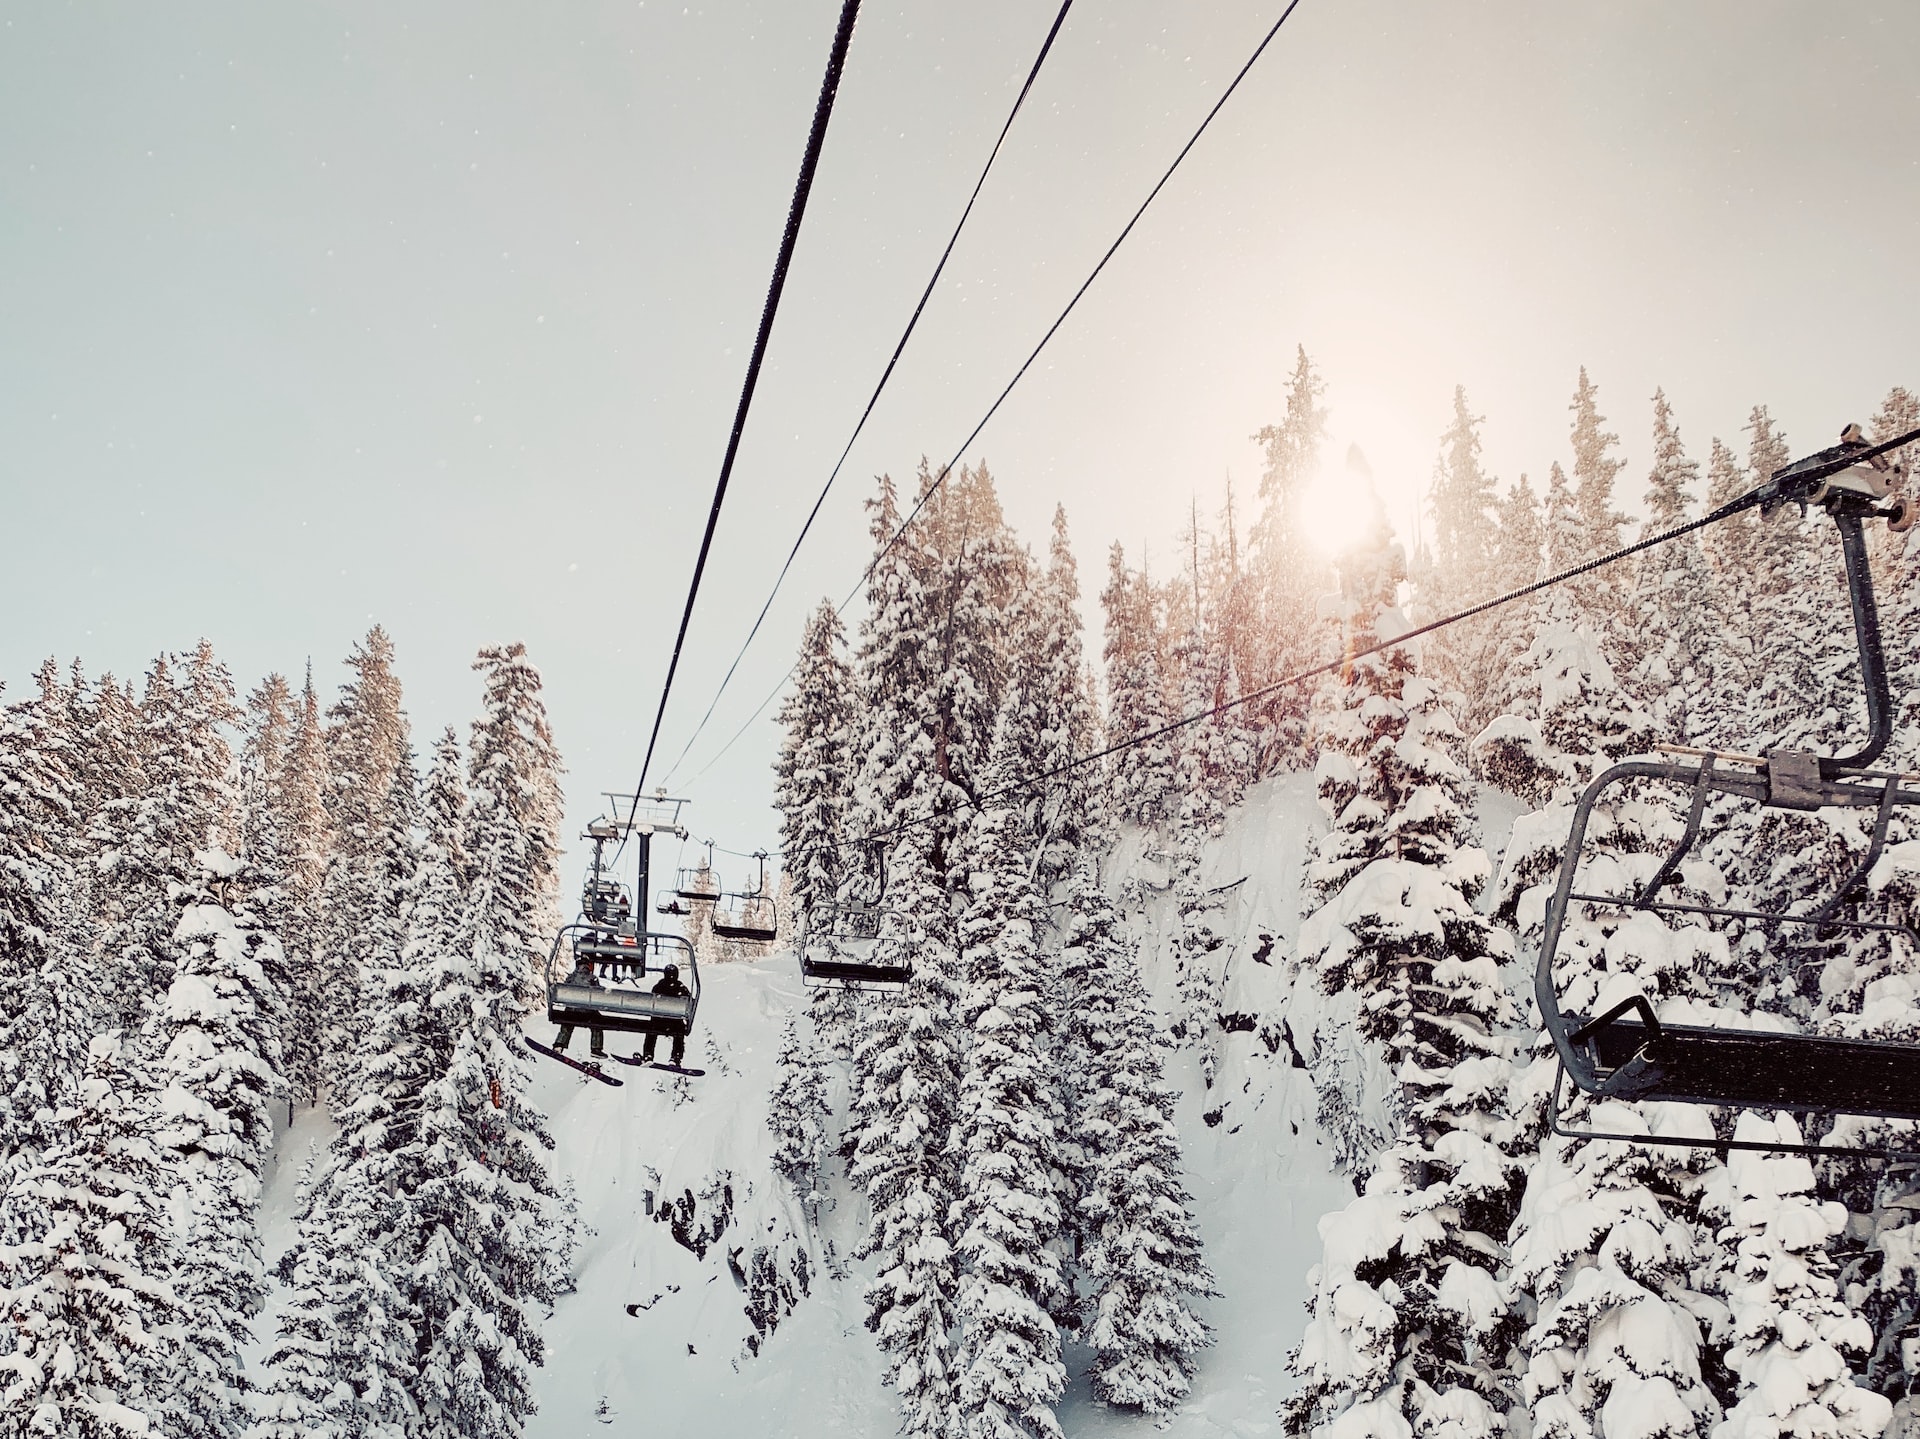 A ski lift climbs over snowy trees on a mountain.